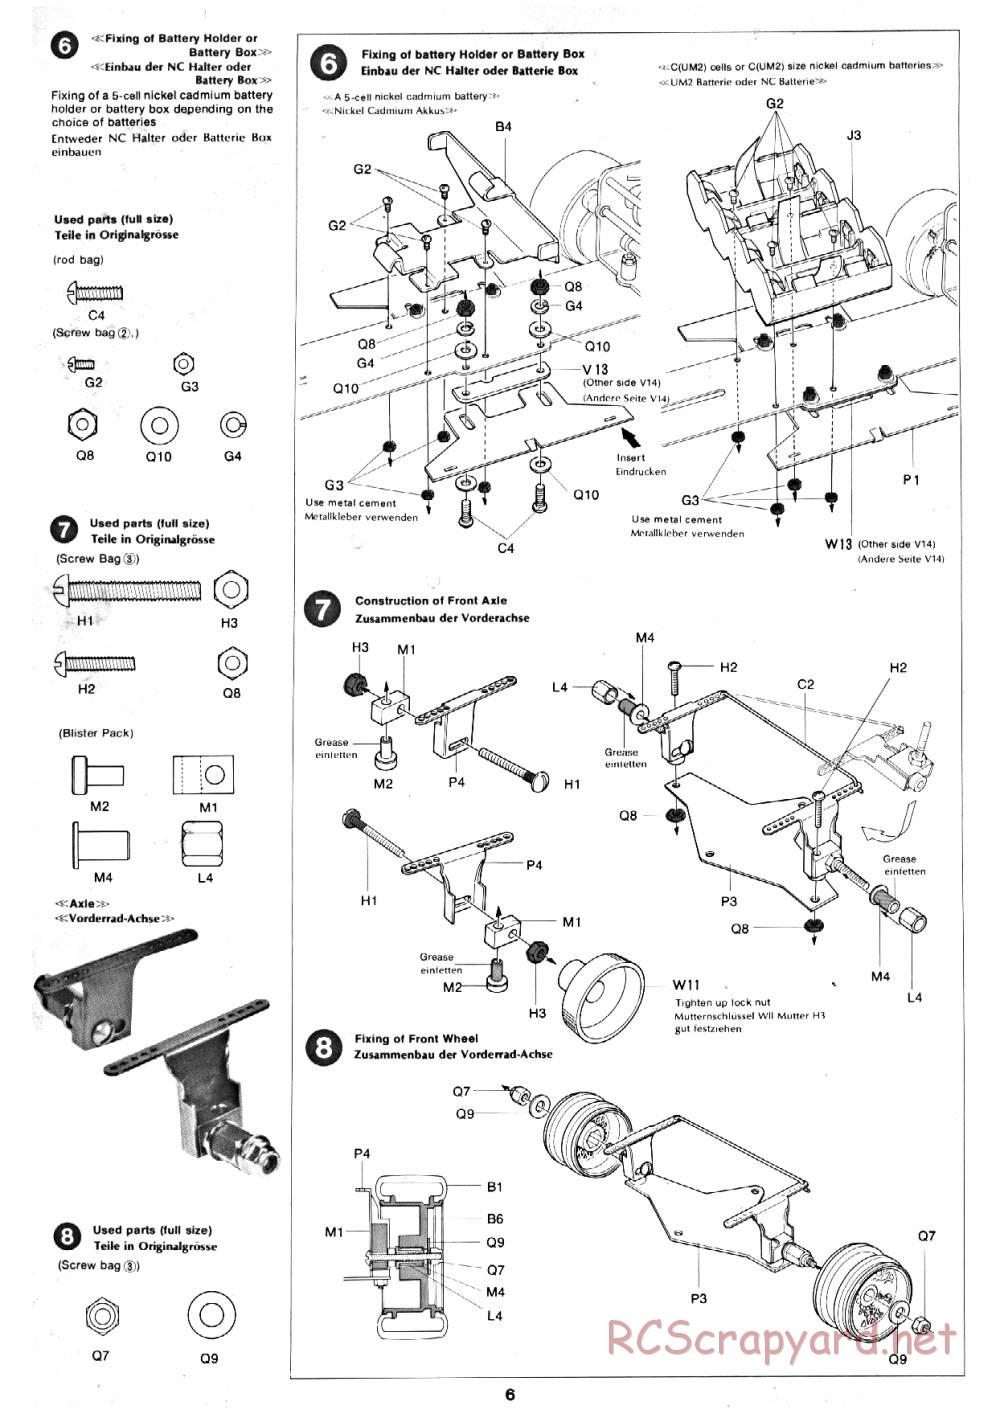 Tamiya - Martini Porsche 935 Turbo - 58002 - Manual - Page 6